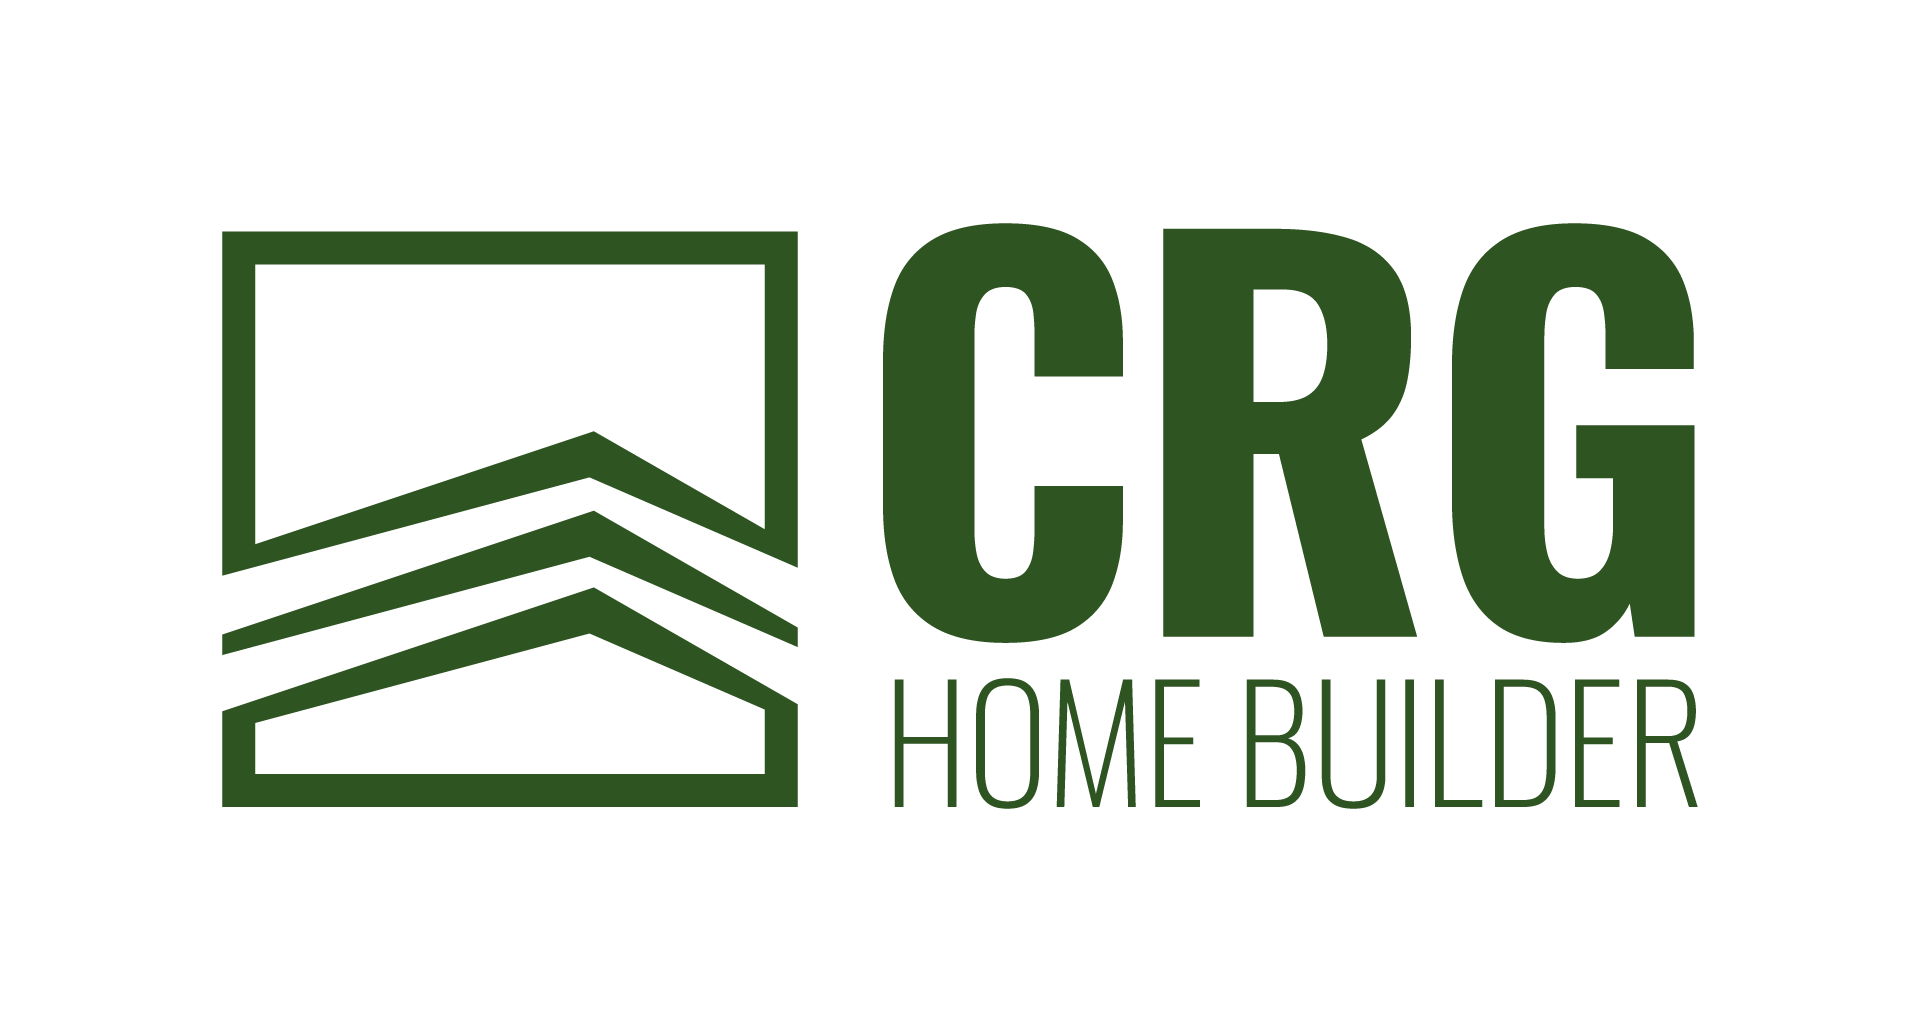 crg-home-builder-full-color-rgb-1920px-w-72ppi